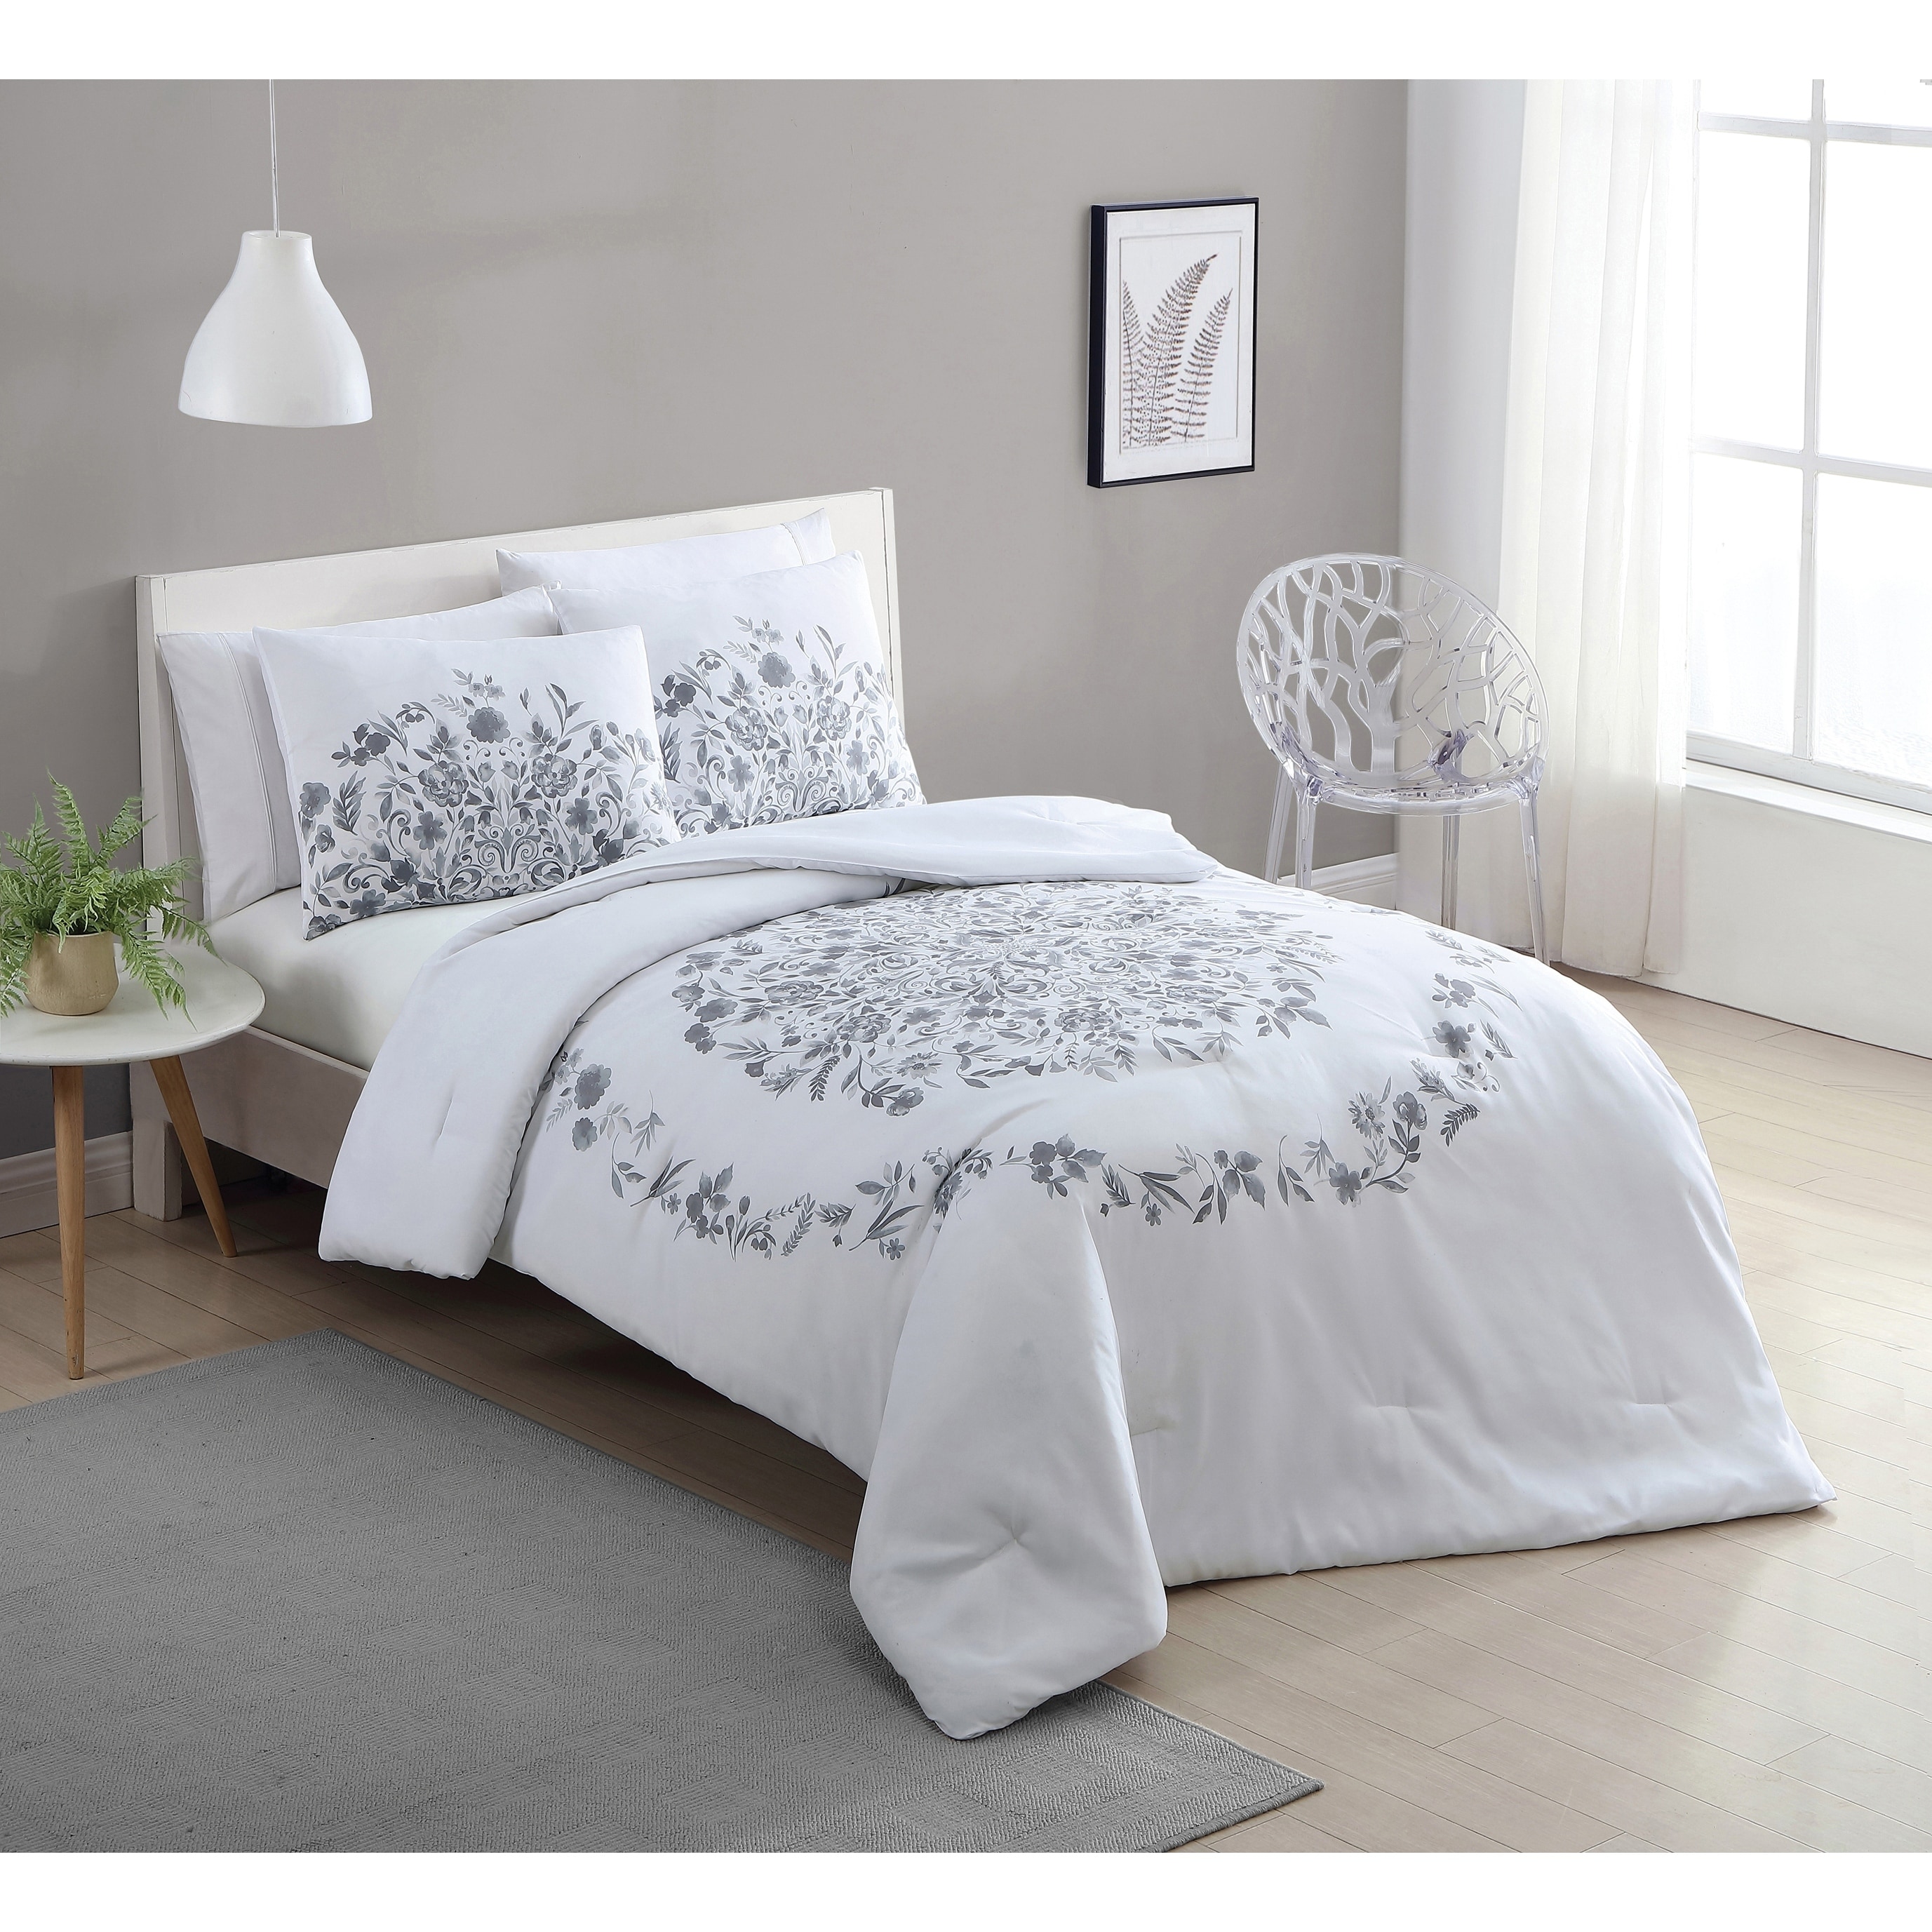 Shop Vcny Home Lauren Black And White Floral Comforter Set On